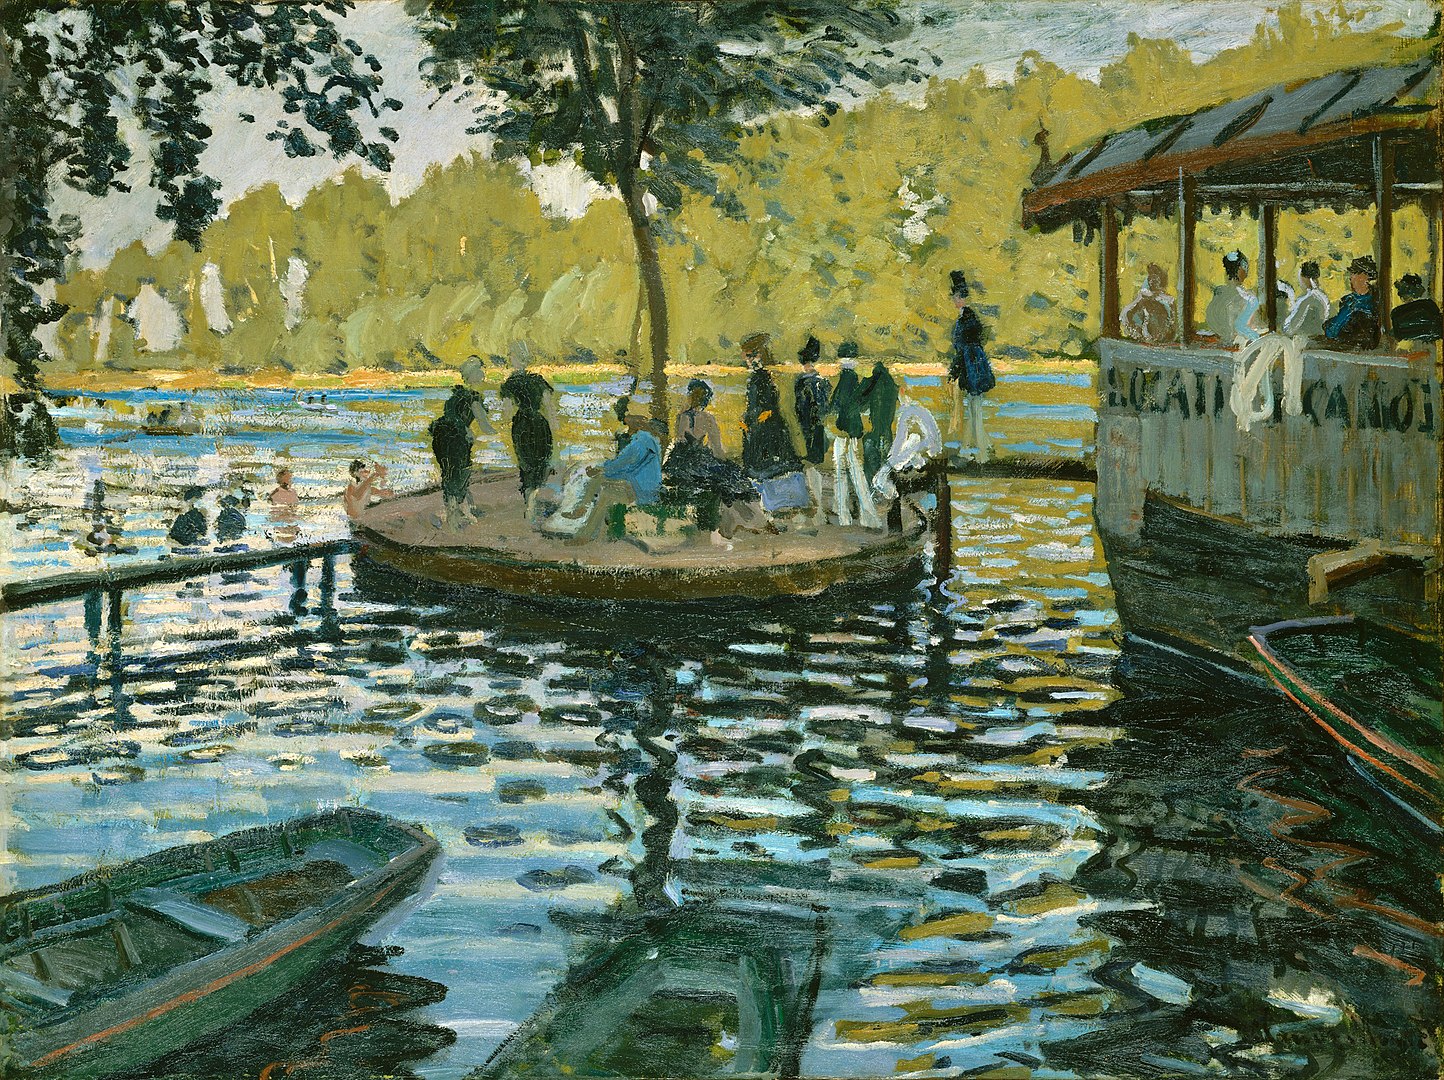 Claude Monet, La Grenouillére, 1869, óleo sobre lienzo, 74,6 x 99,7 cm, Metropolitan Museum of Art, Nueva York.